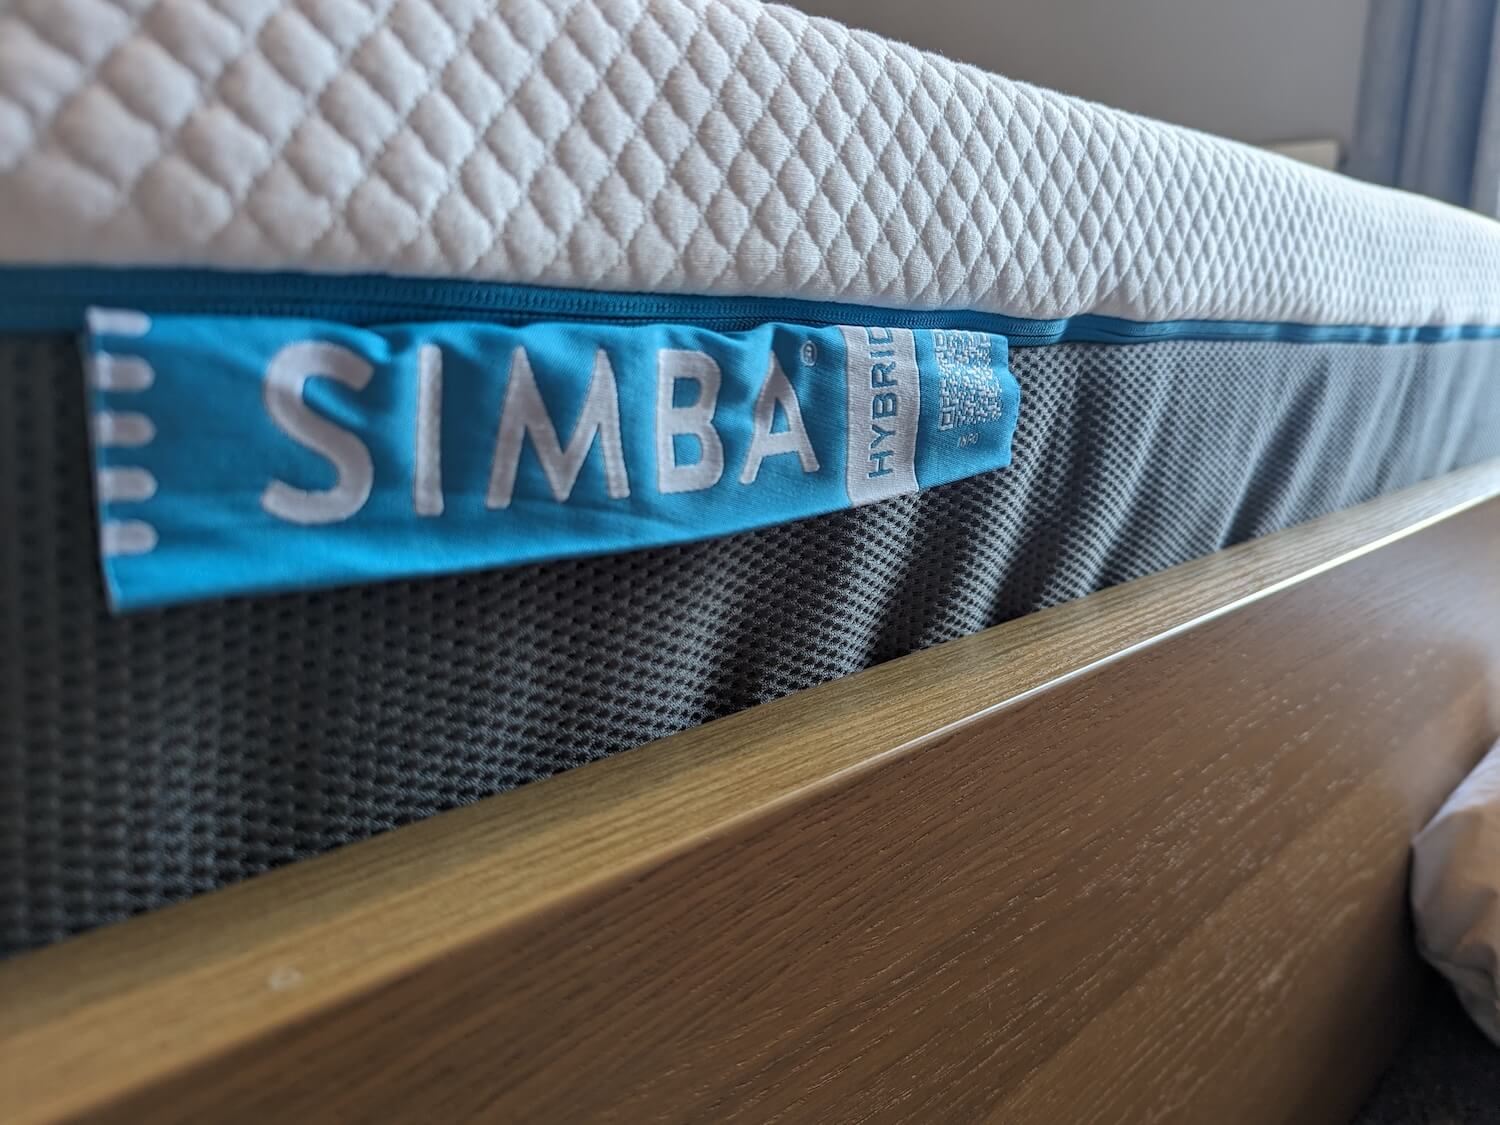 simba mattress review